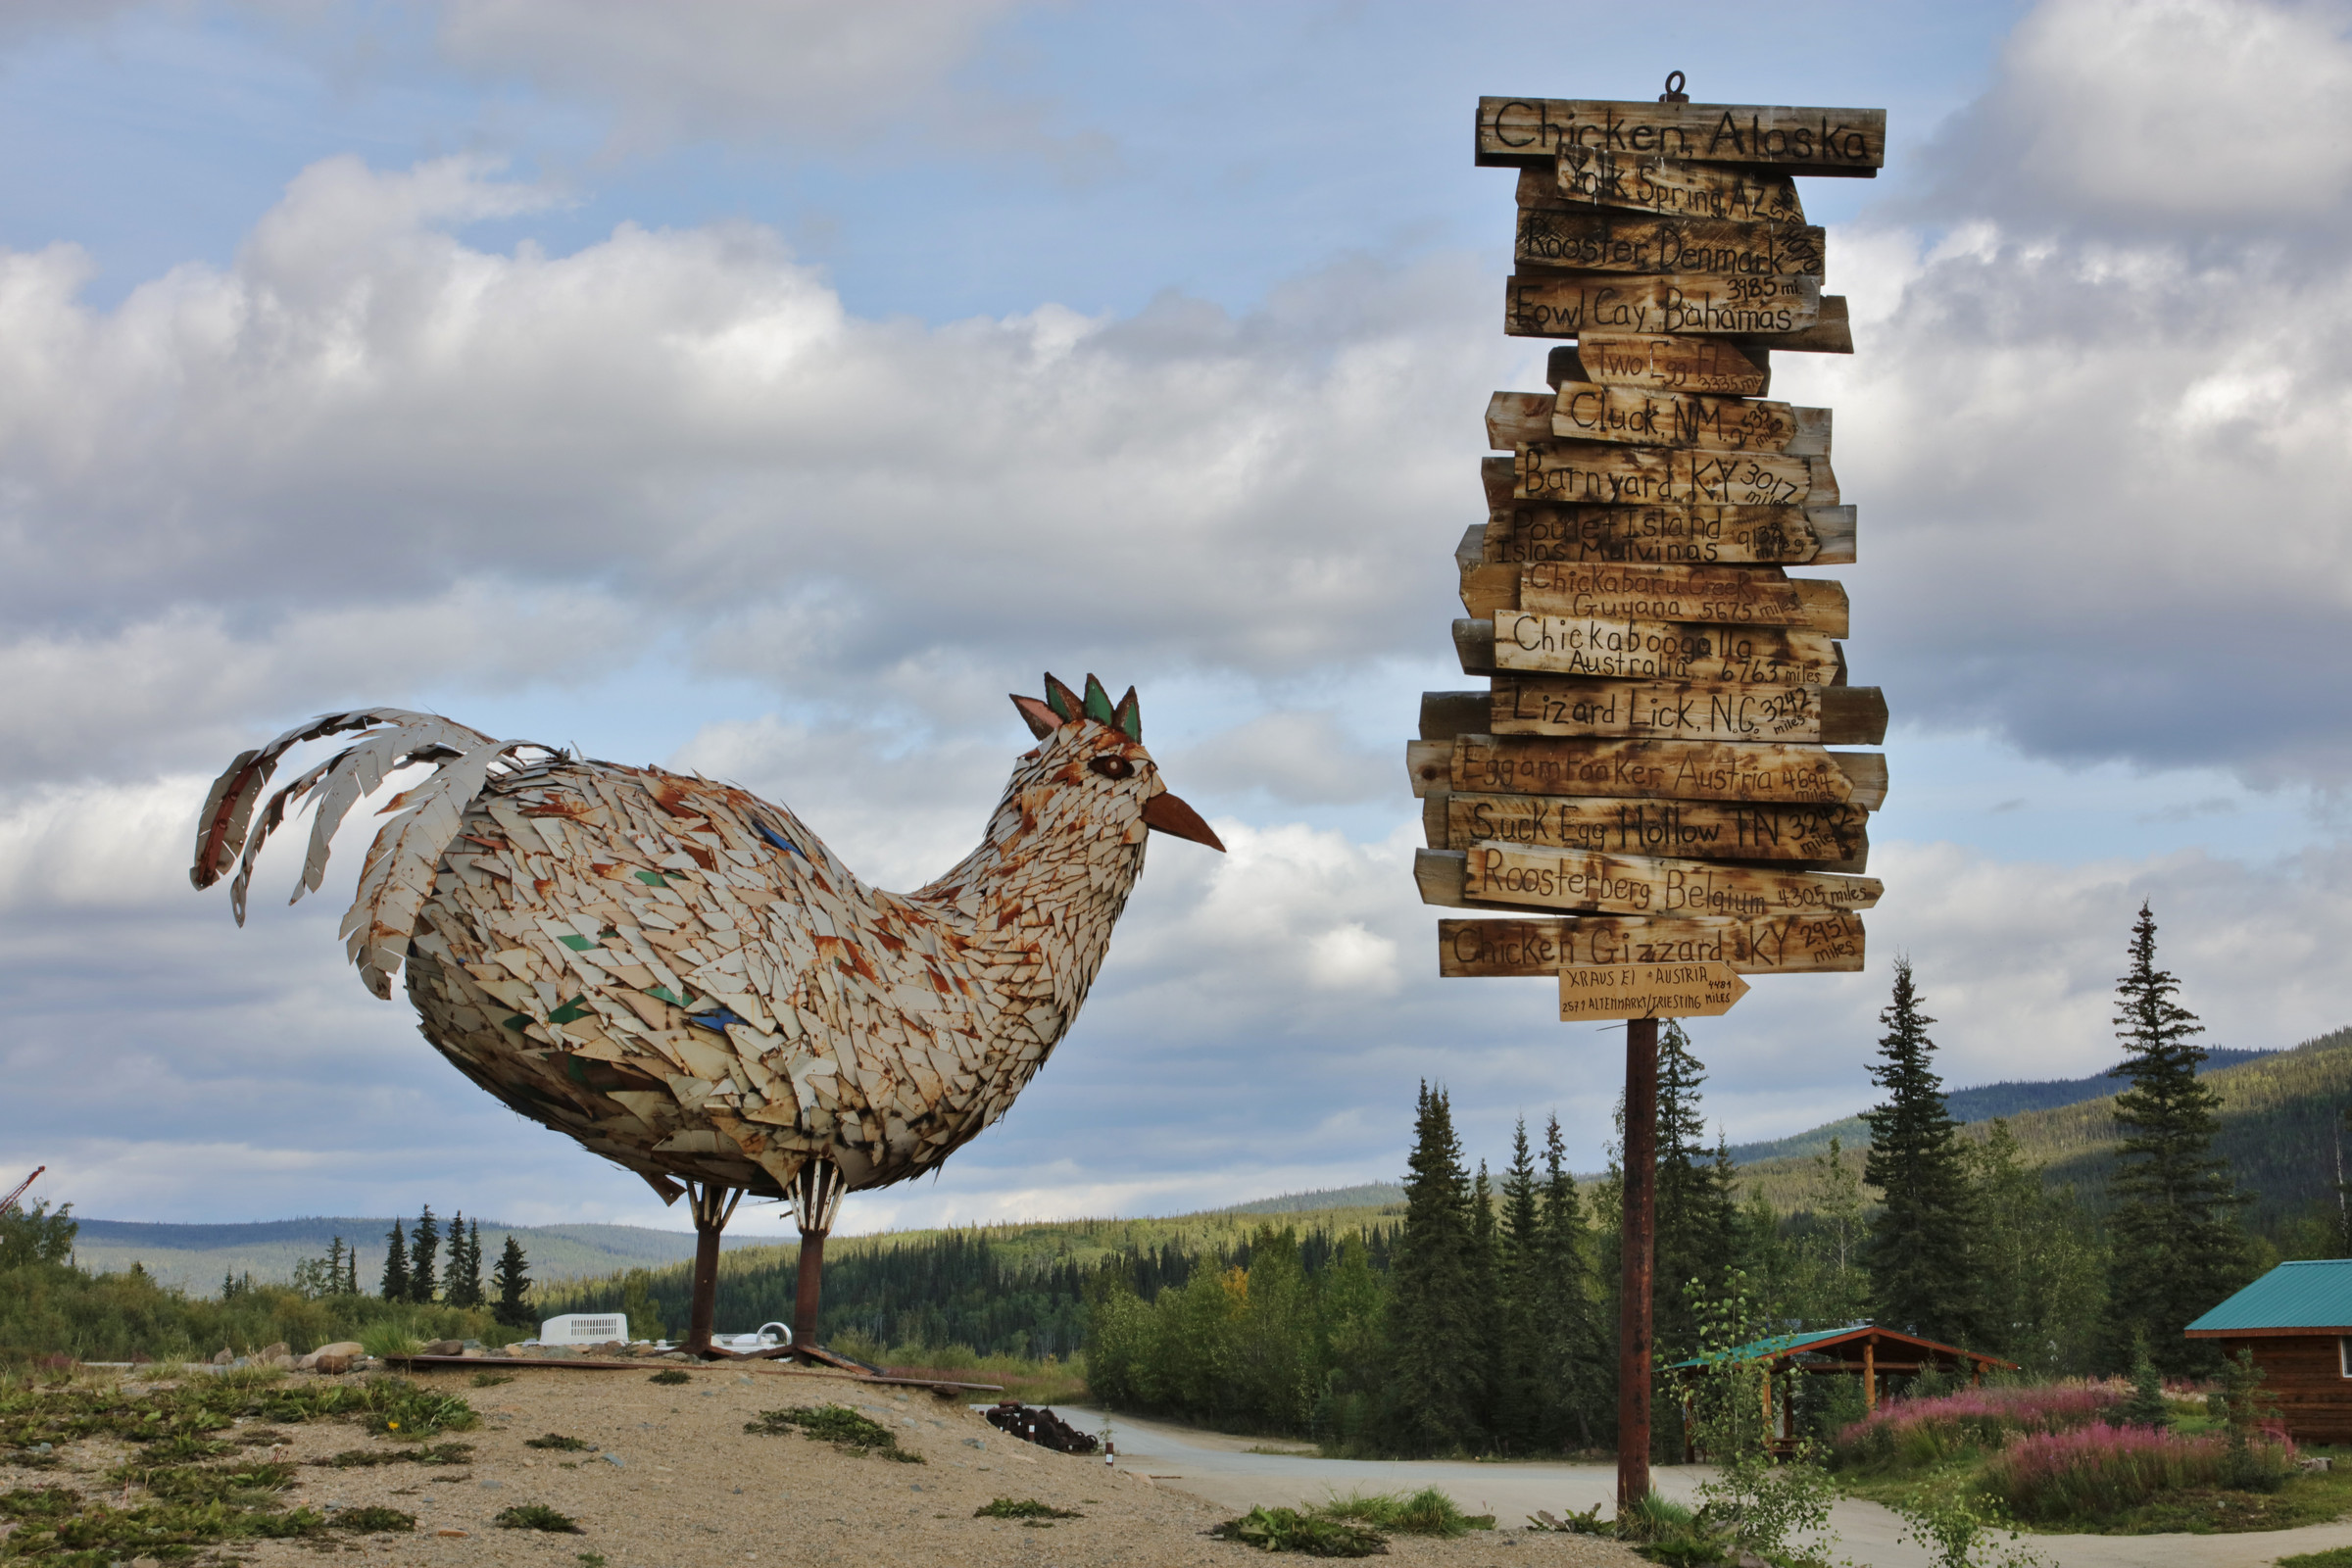 Chicken, Alaska Photo